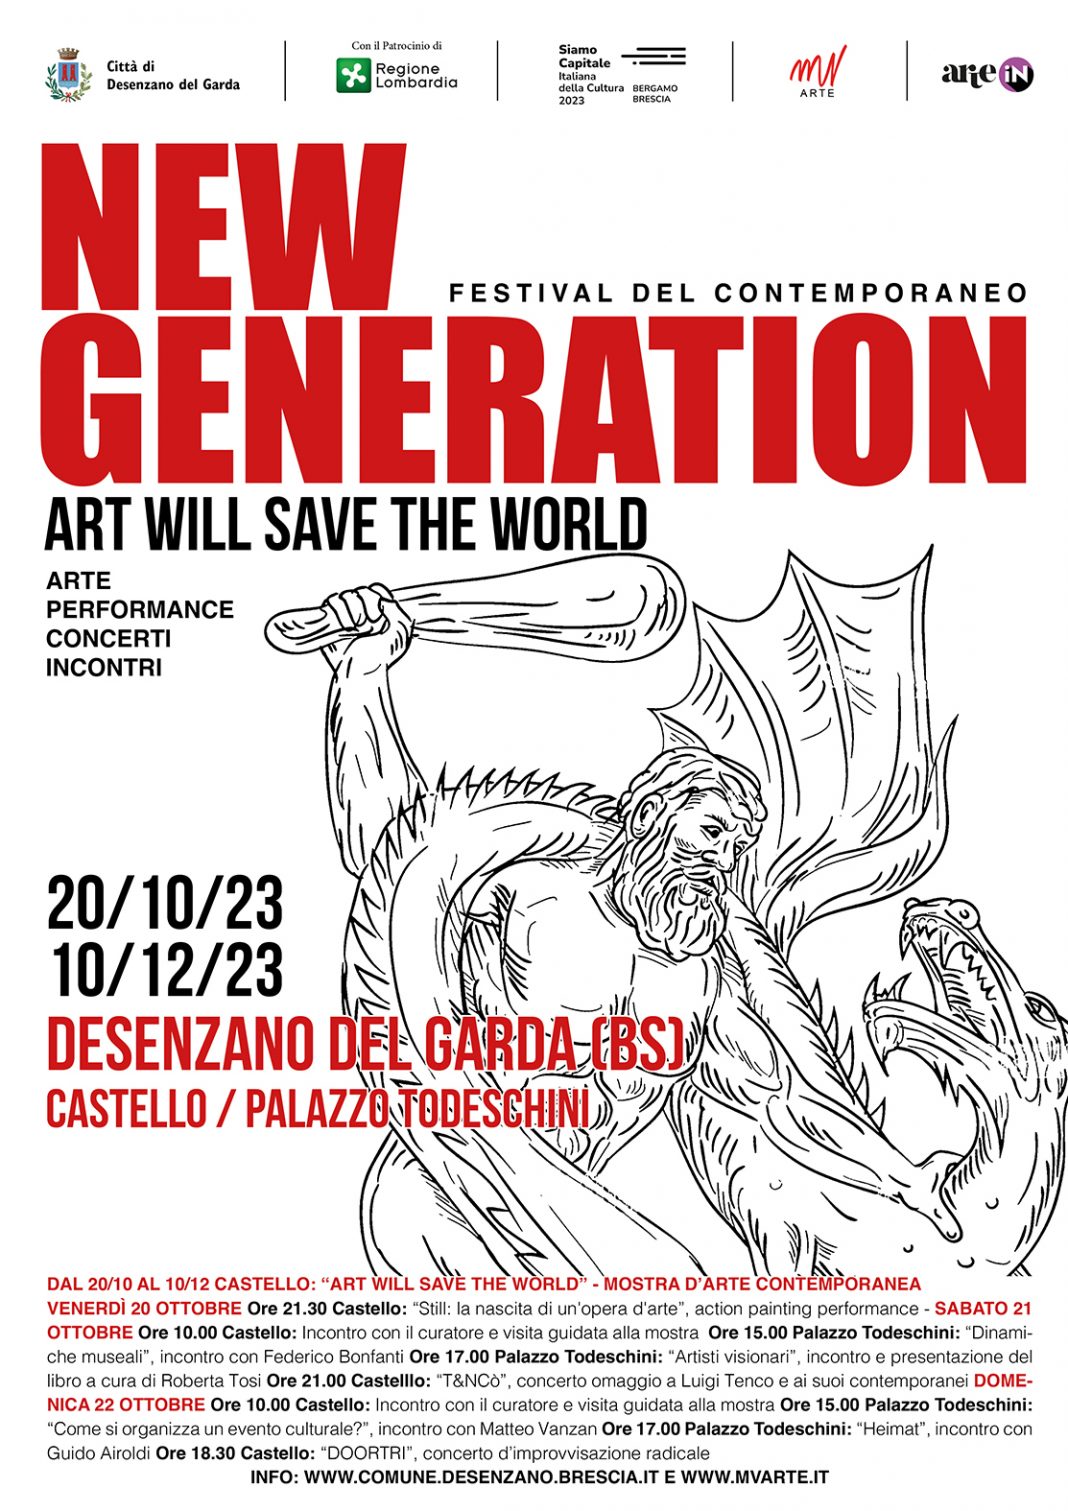 New Generation – Festival del Contemporaneohttps://www.exibart.com/repository/media/formidable/11/img/c91/NG_Festival-del-Contemporaneo-1068x1511.jpg